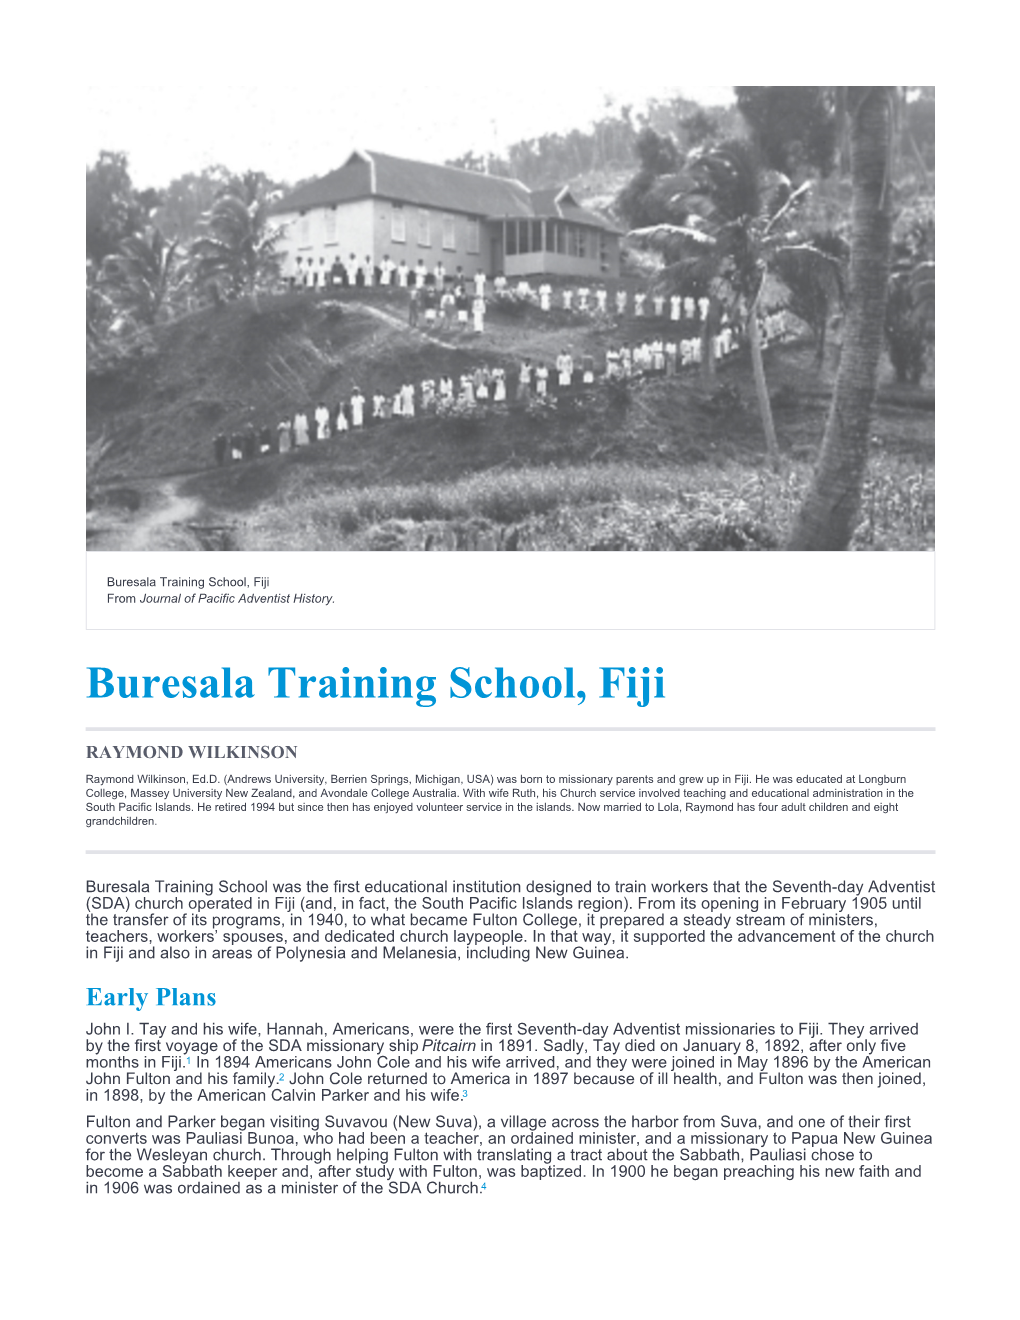 Buresala Training School, Fiji from Journal of Pacific Adventist History